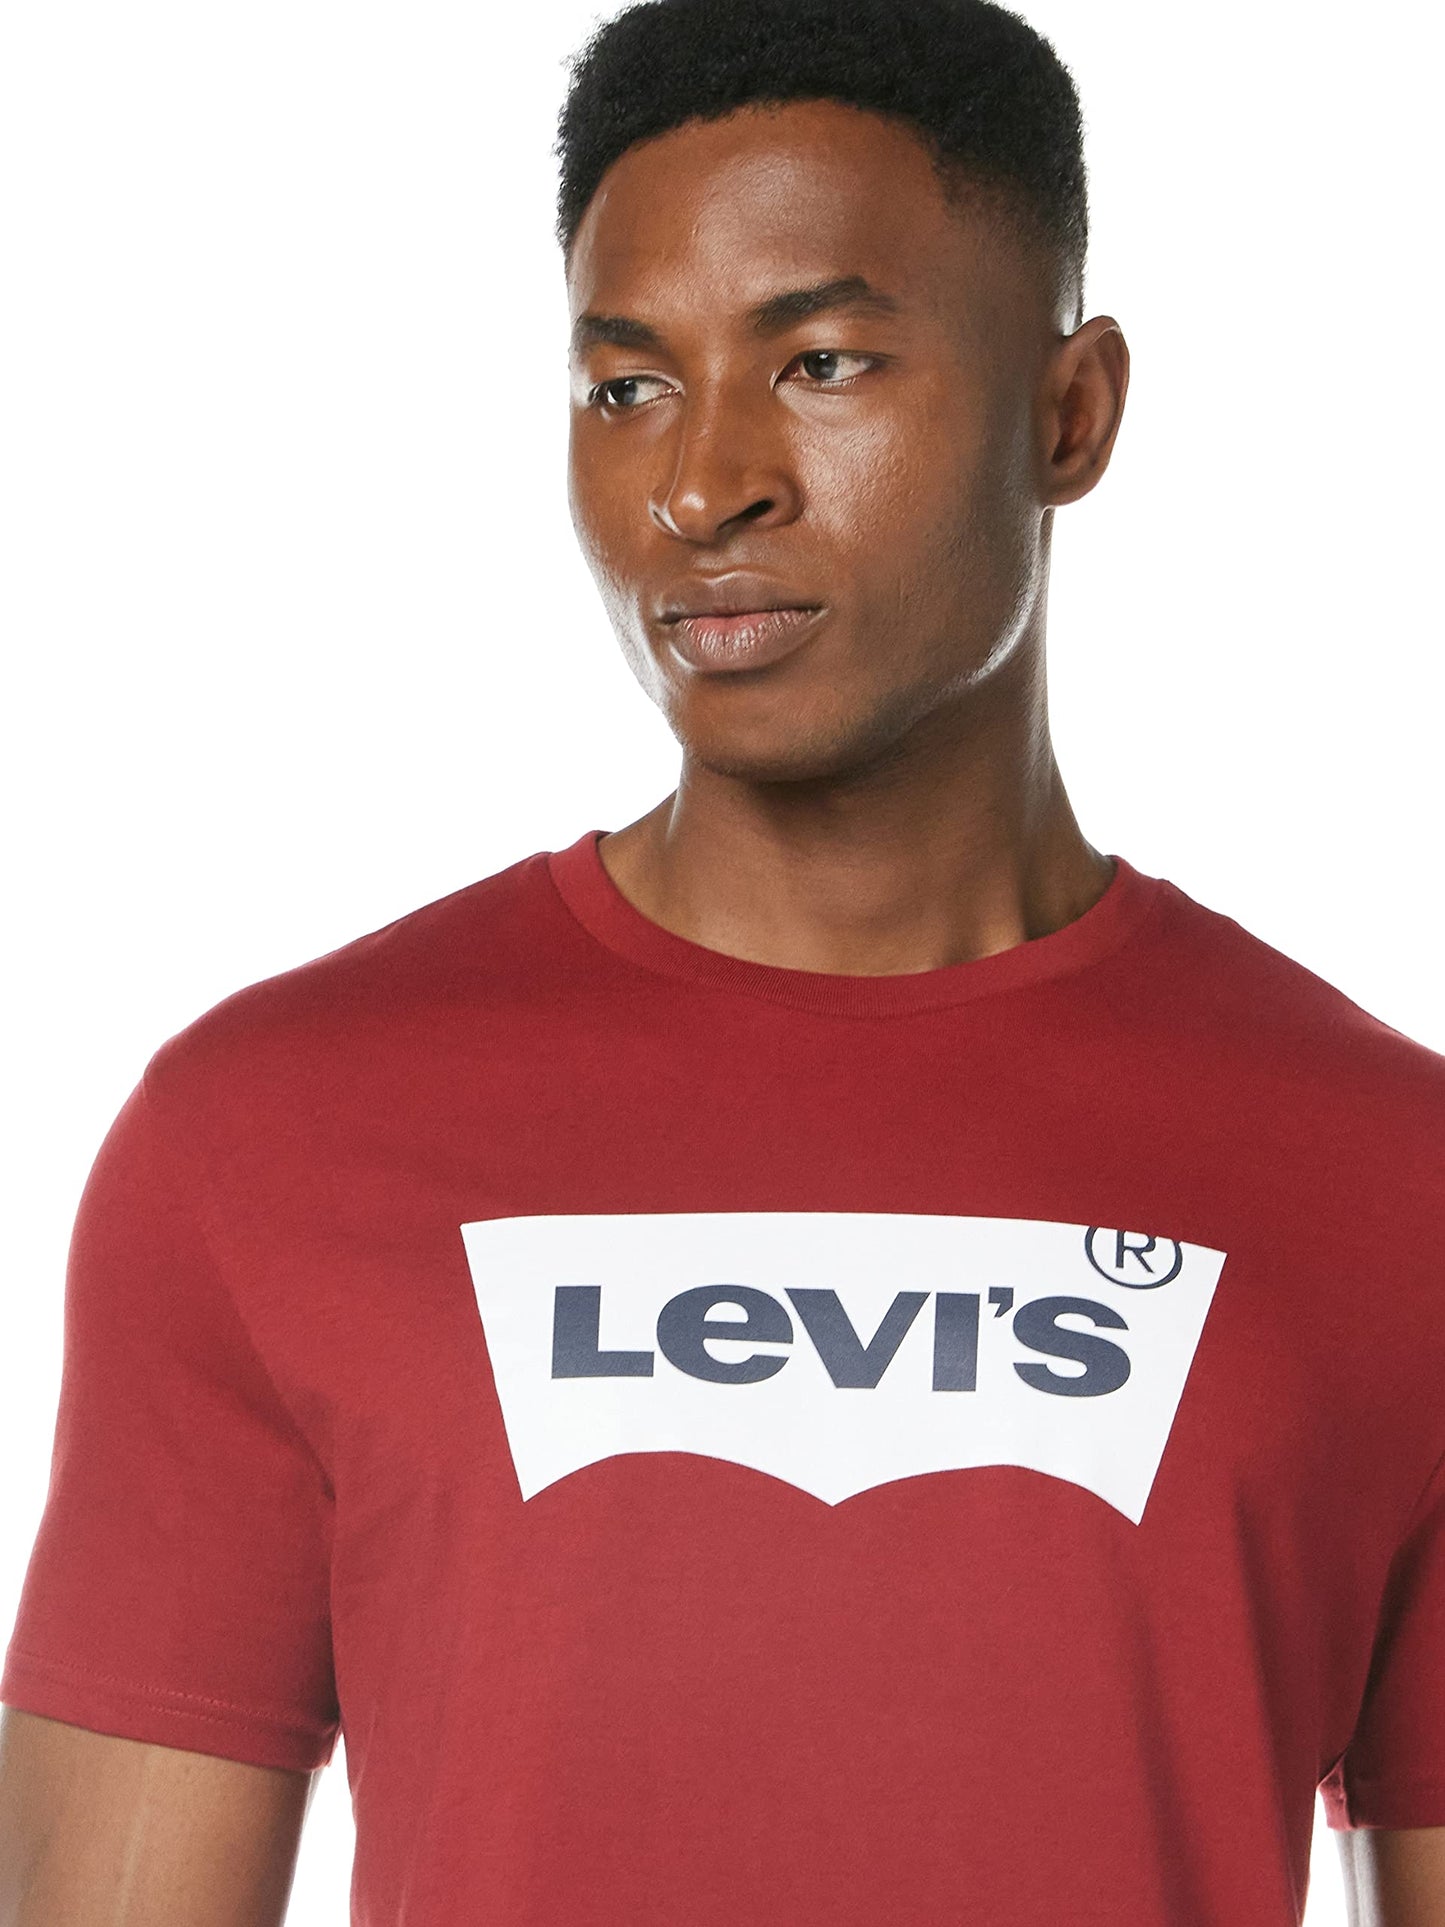 Levi's Men's Regular Fit T-Shirt (16960-0124_Medium_Red)